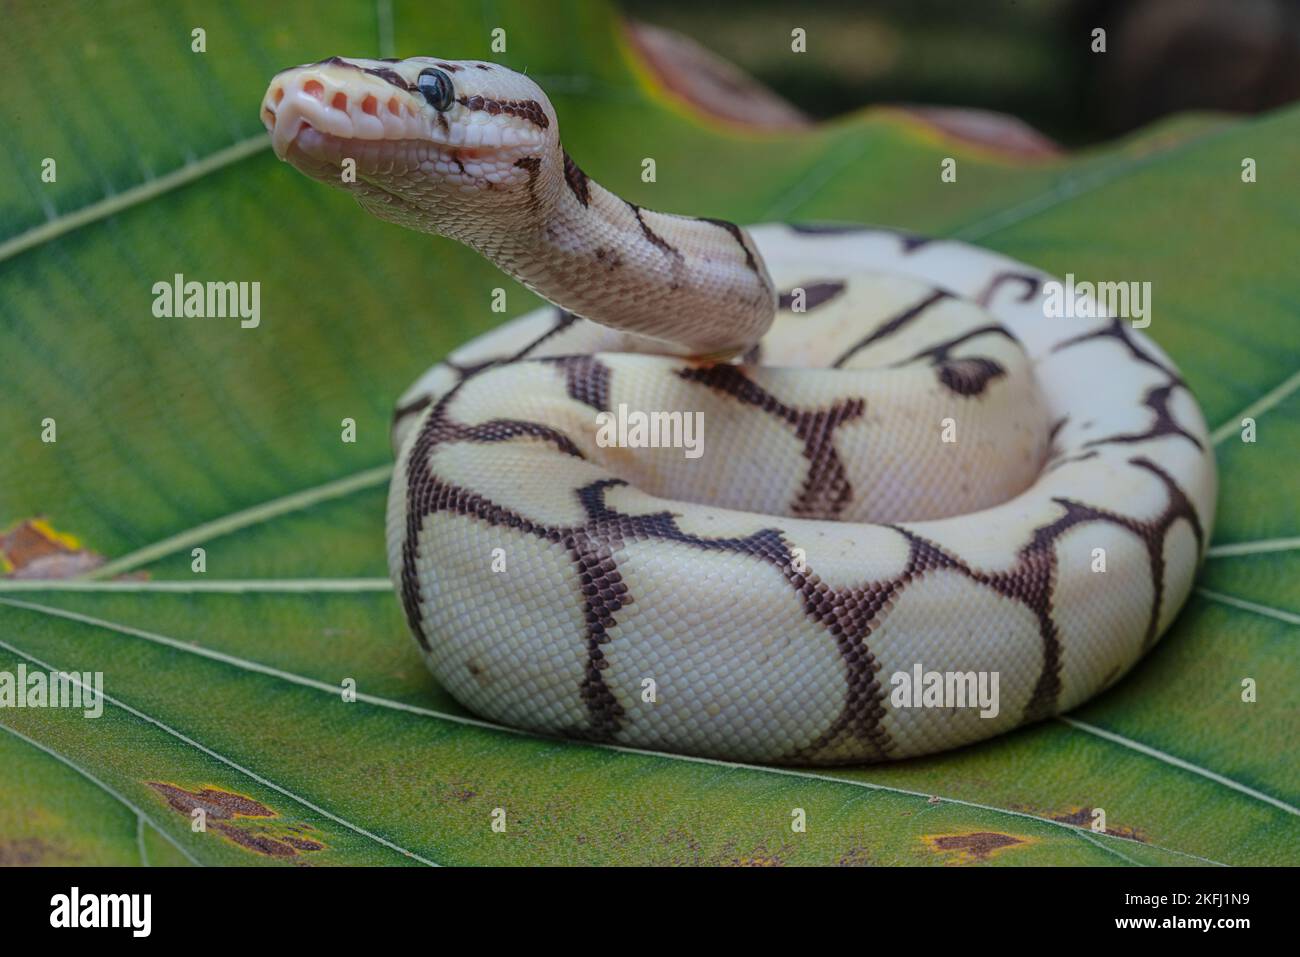 A closeup shot of a ball python (Python regius) on a green leaf Stock Photo